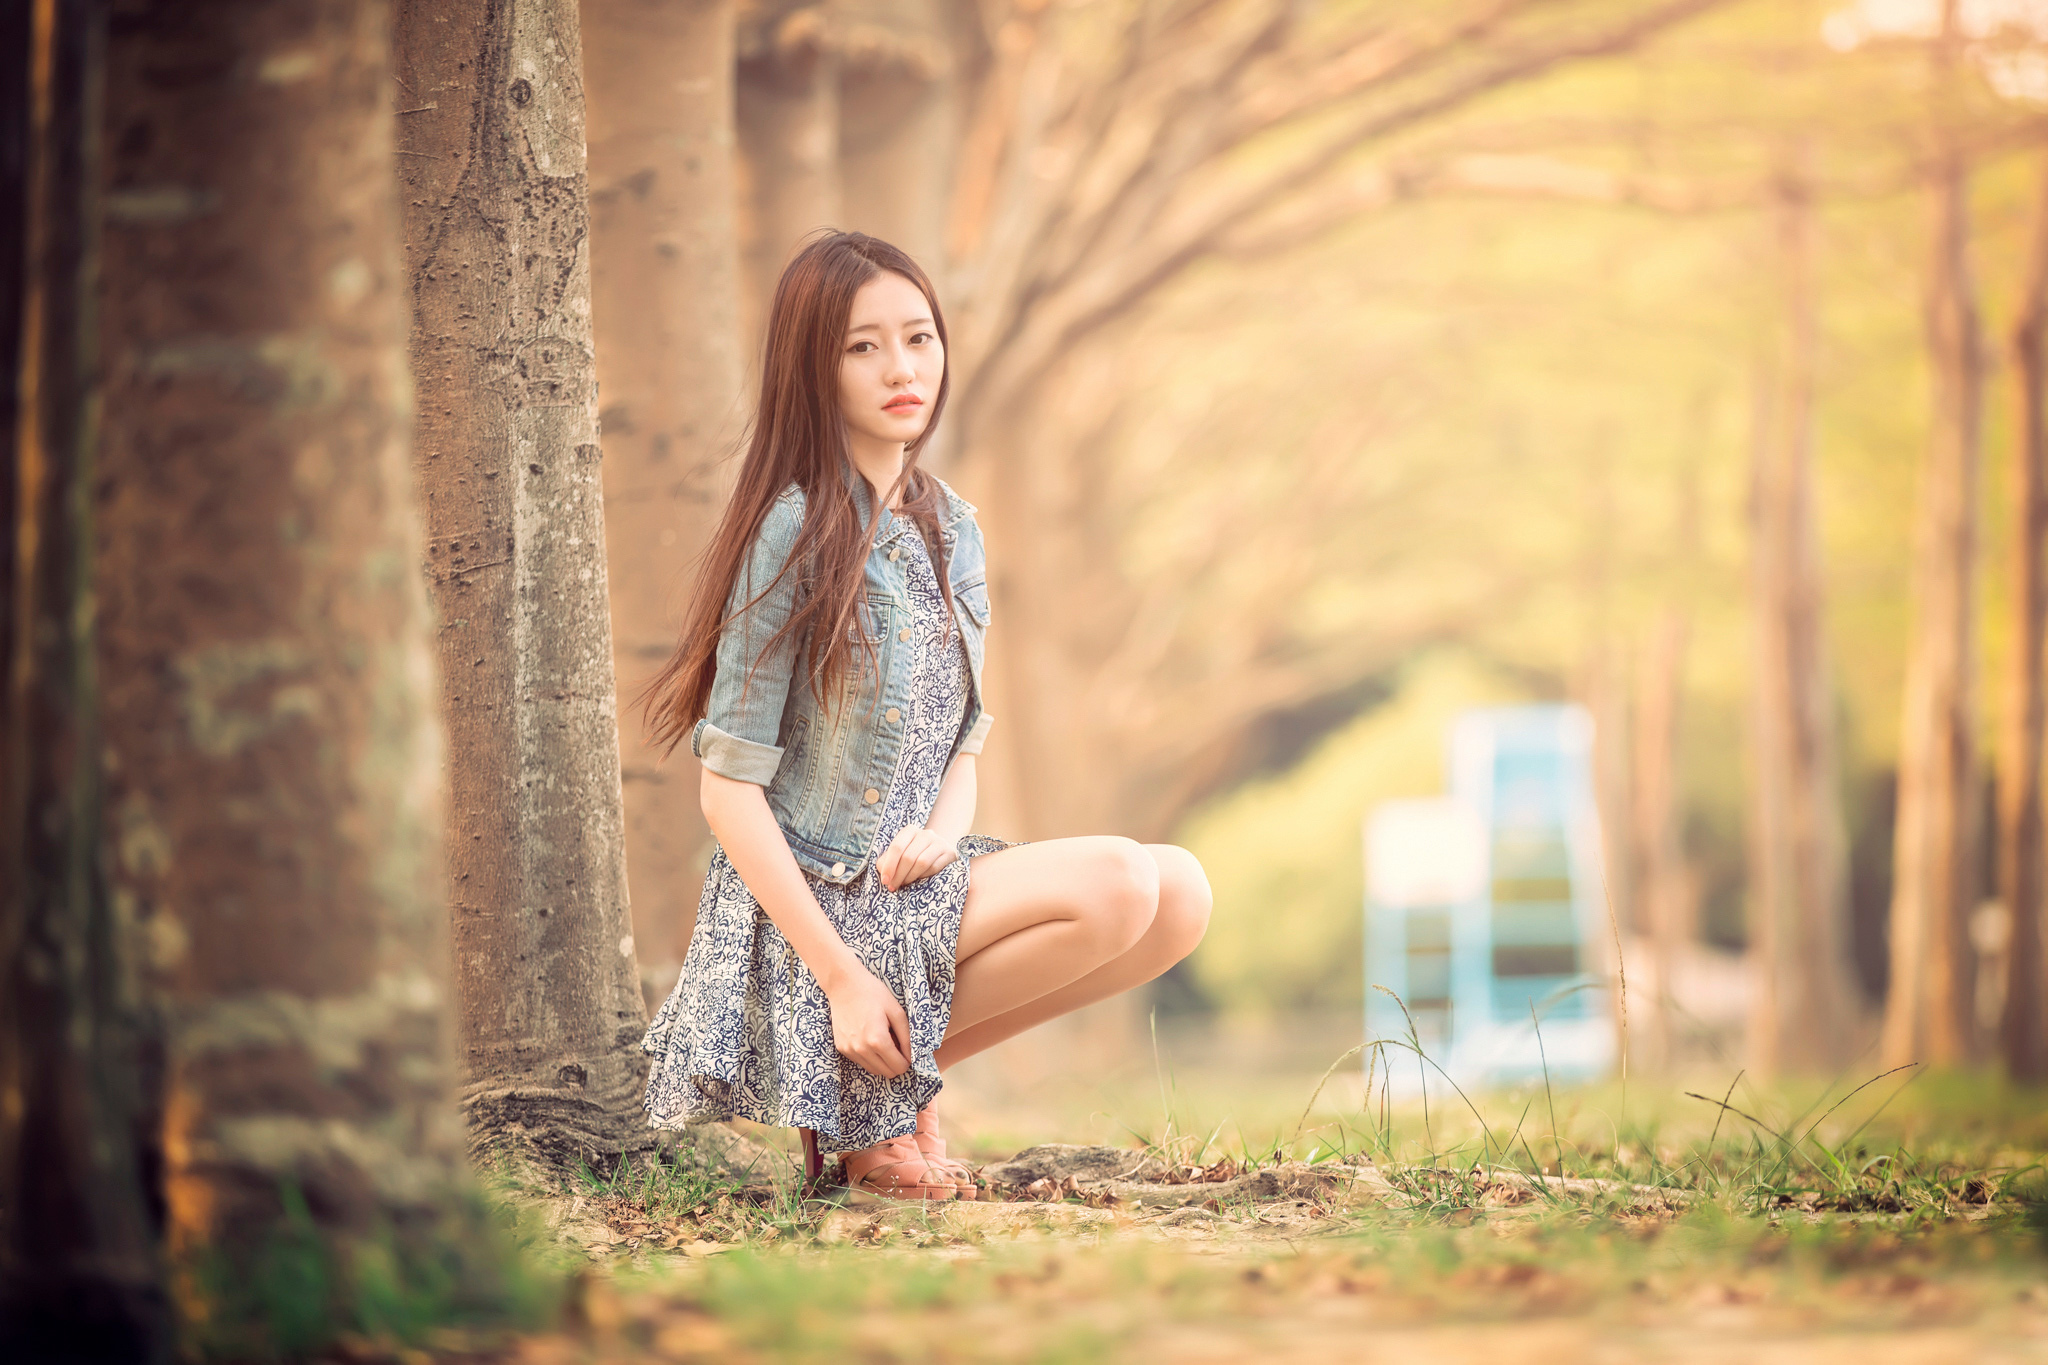 Asian Model Women Long Hair Dark Hair Forest Depth Of Field Barefoot Sandal Trees Jeans Jacket Dress 2048x1365